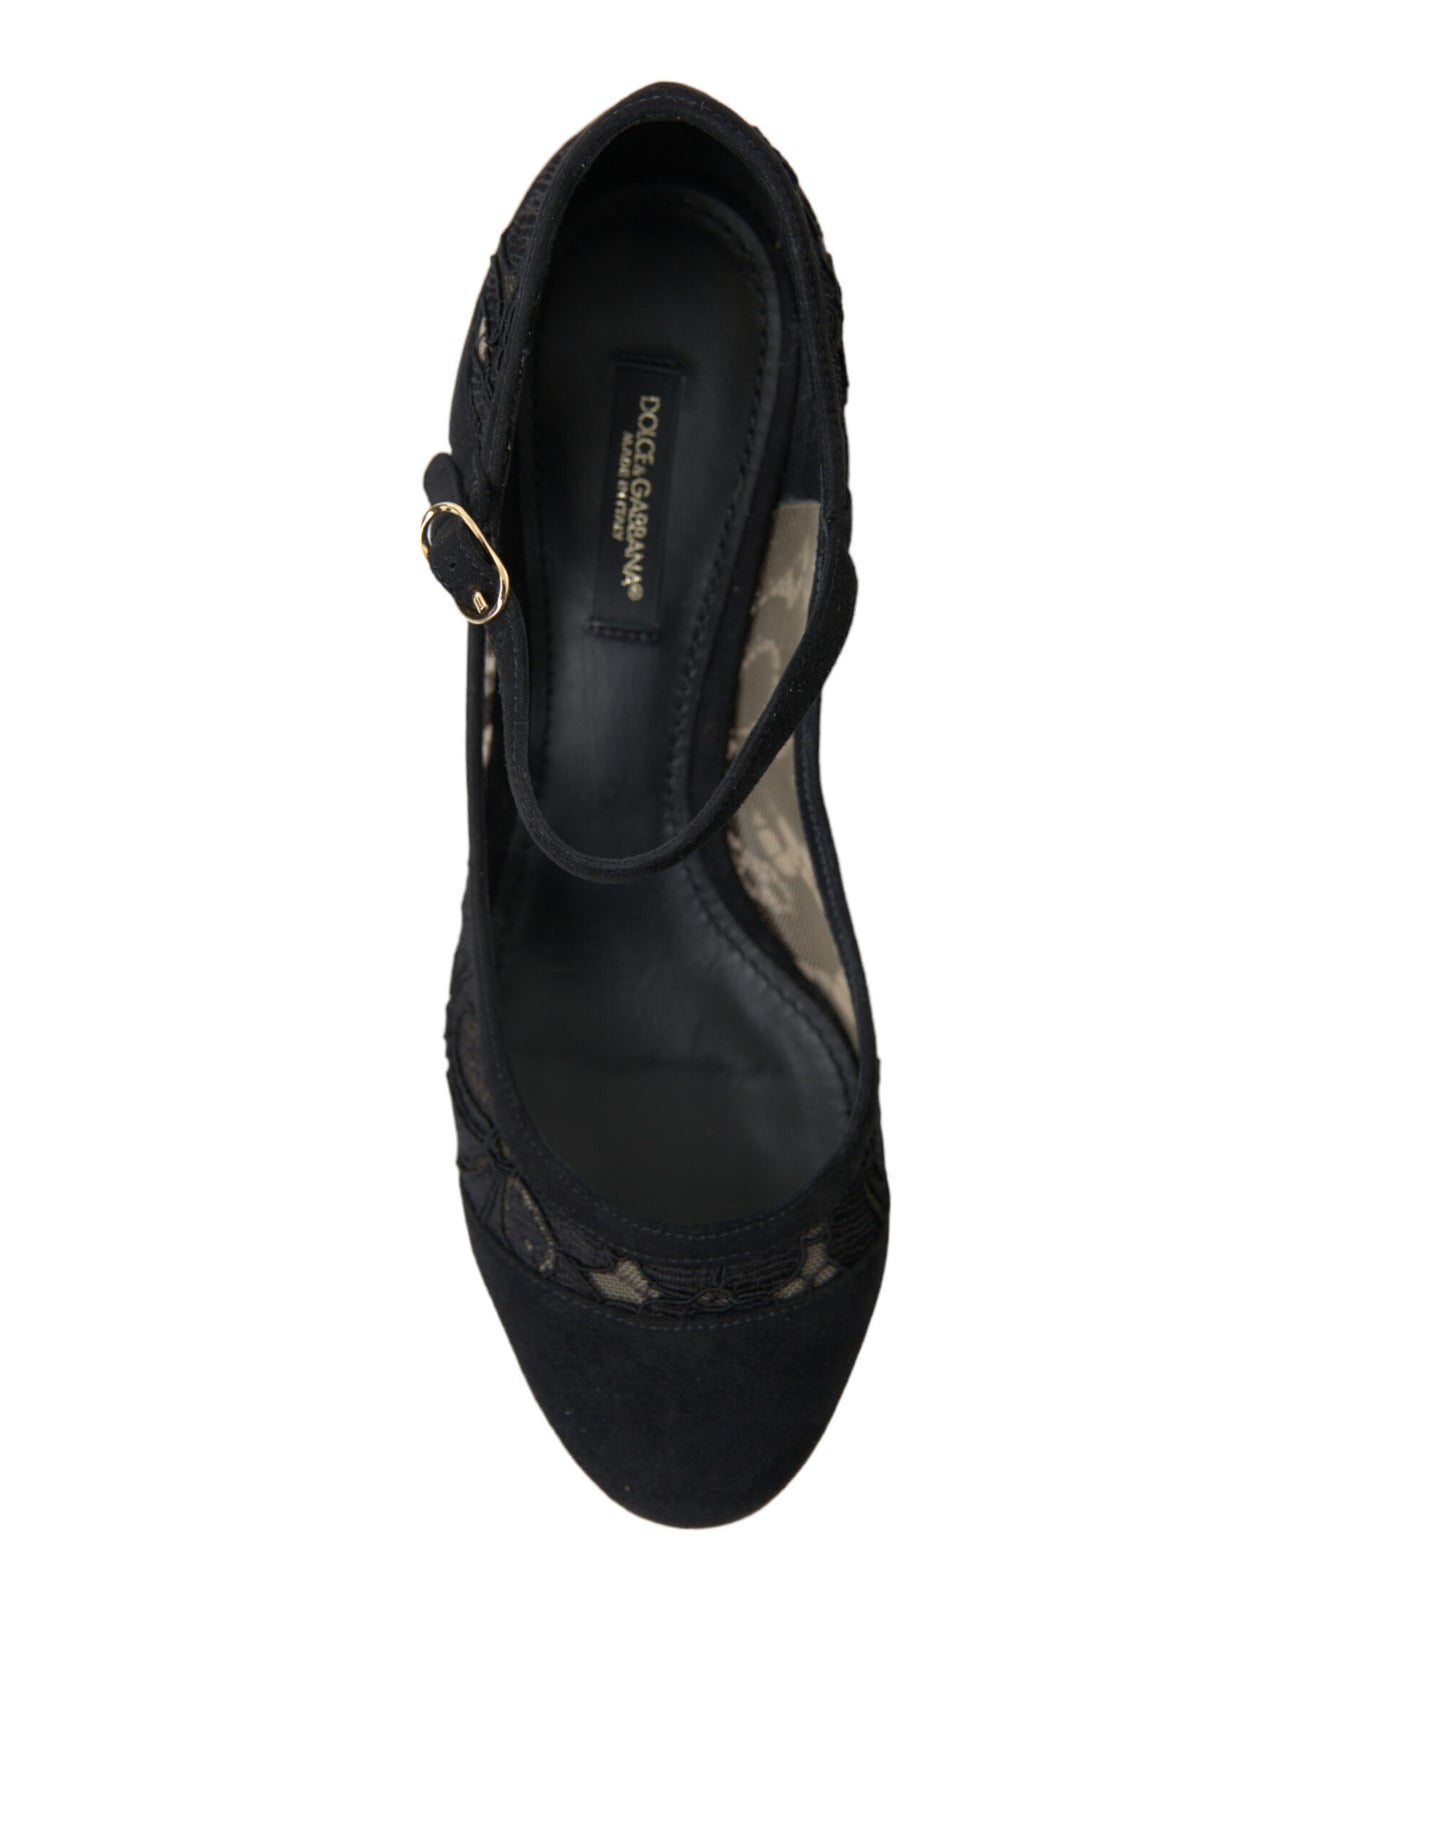 Dolce & Gabbana Black Mary Jane Taormina Lace Pumps Shoes - DEA STILOSA MILANO